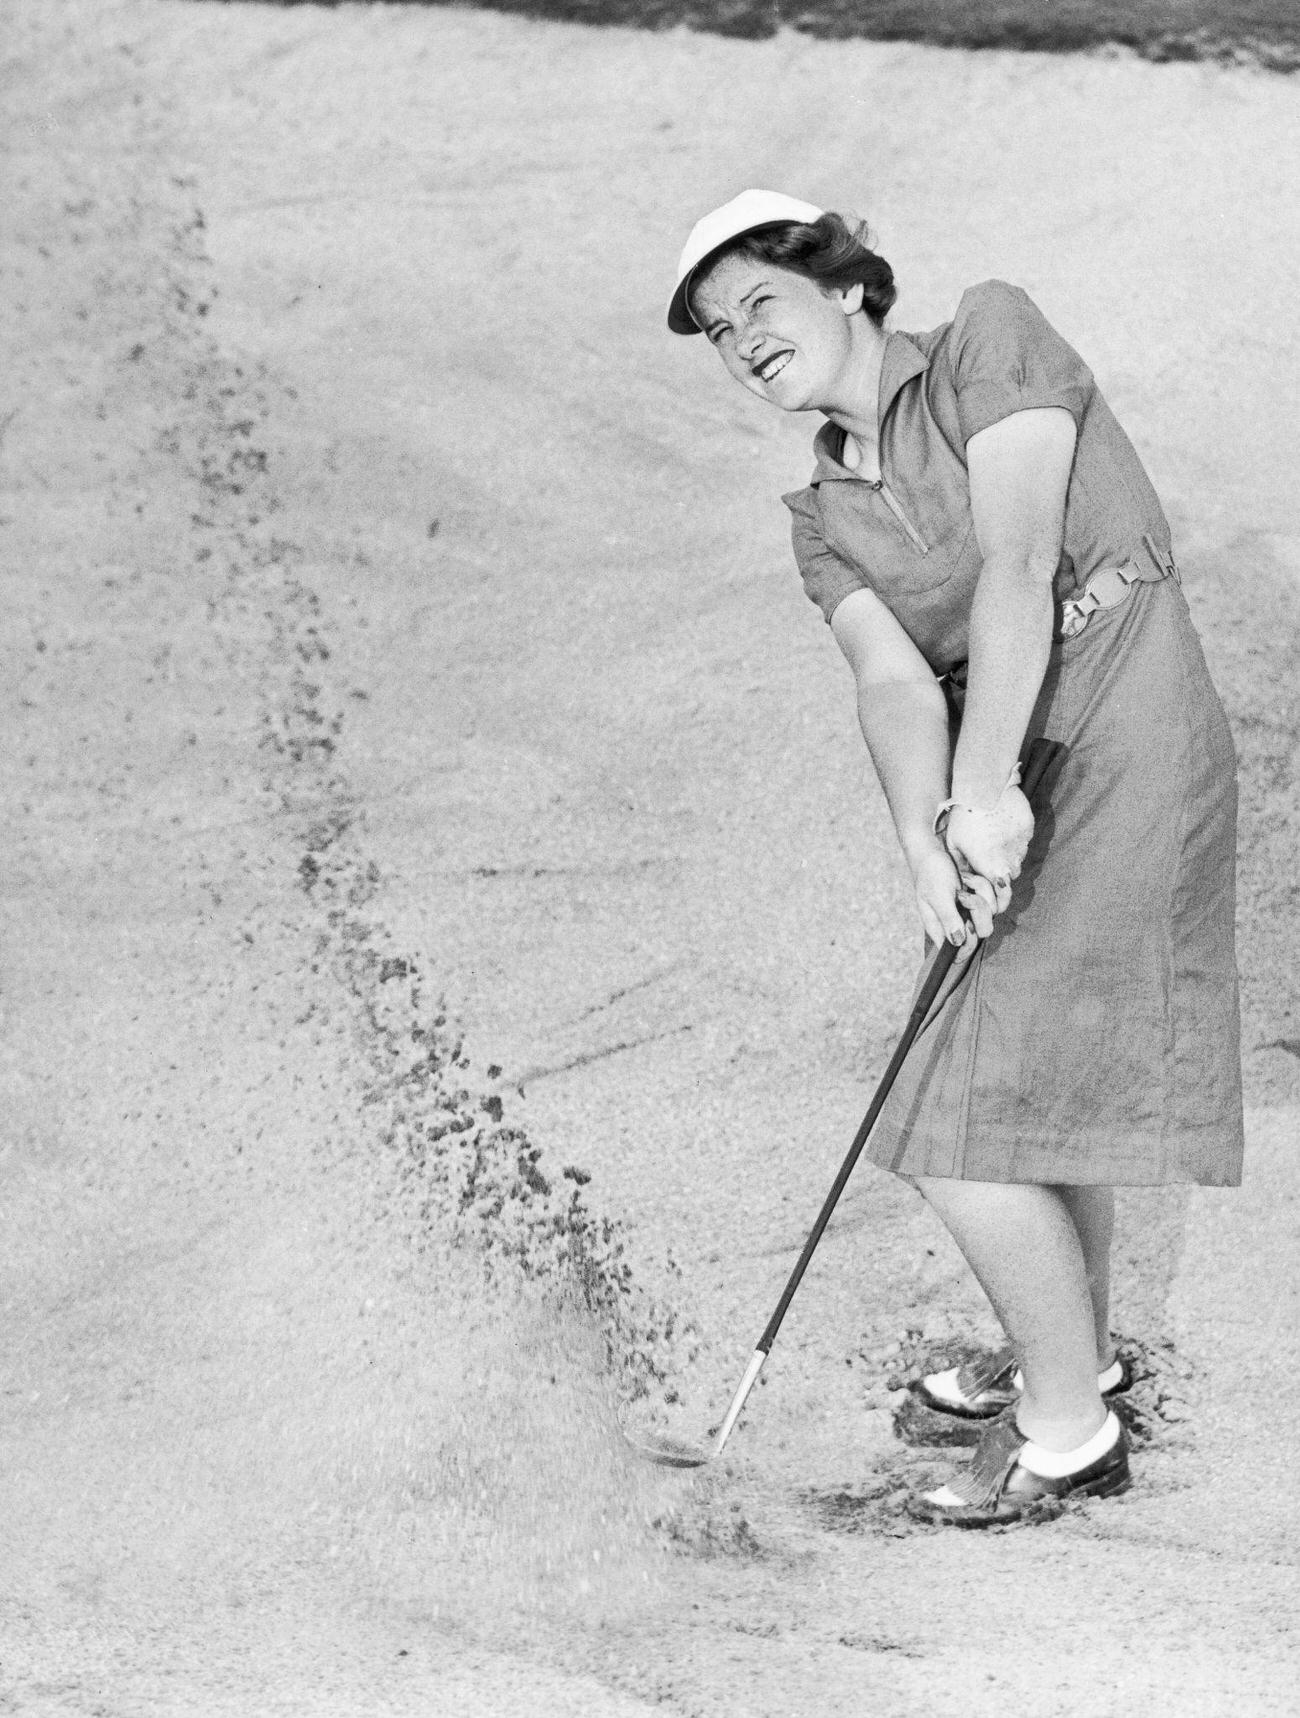 Woman playing golf, Keystone-France photo.